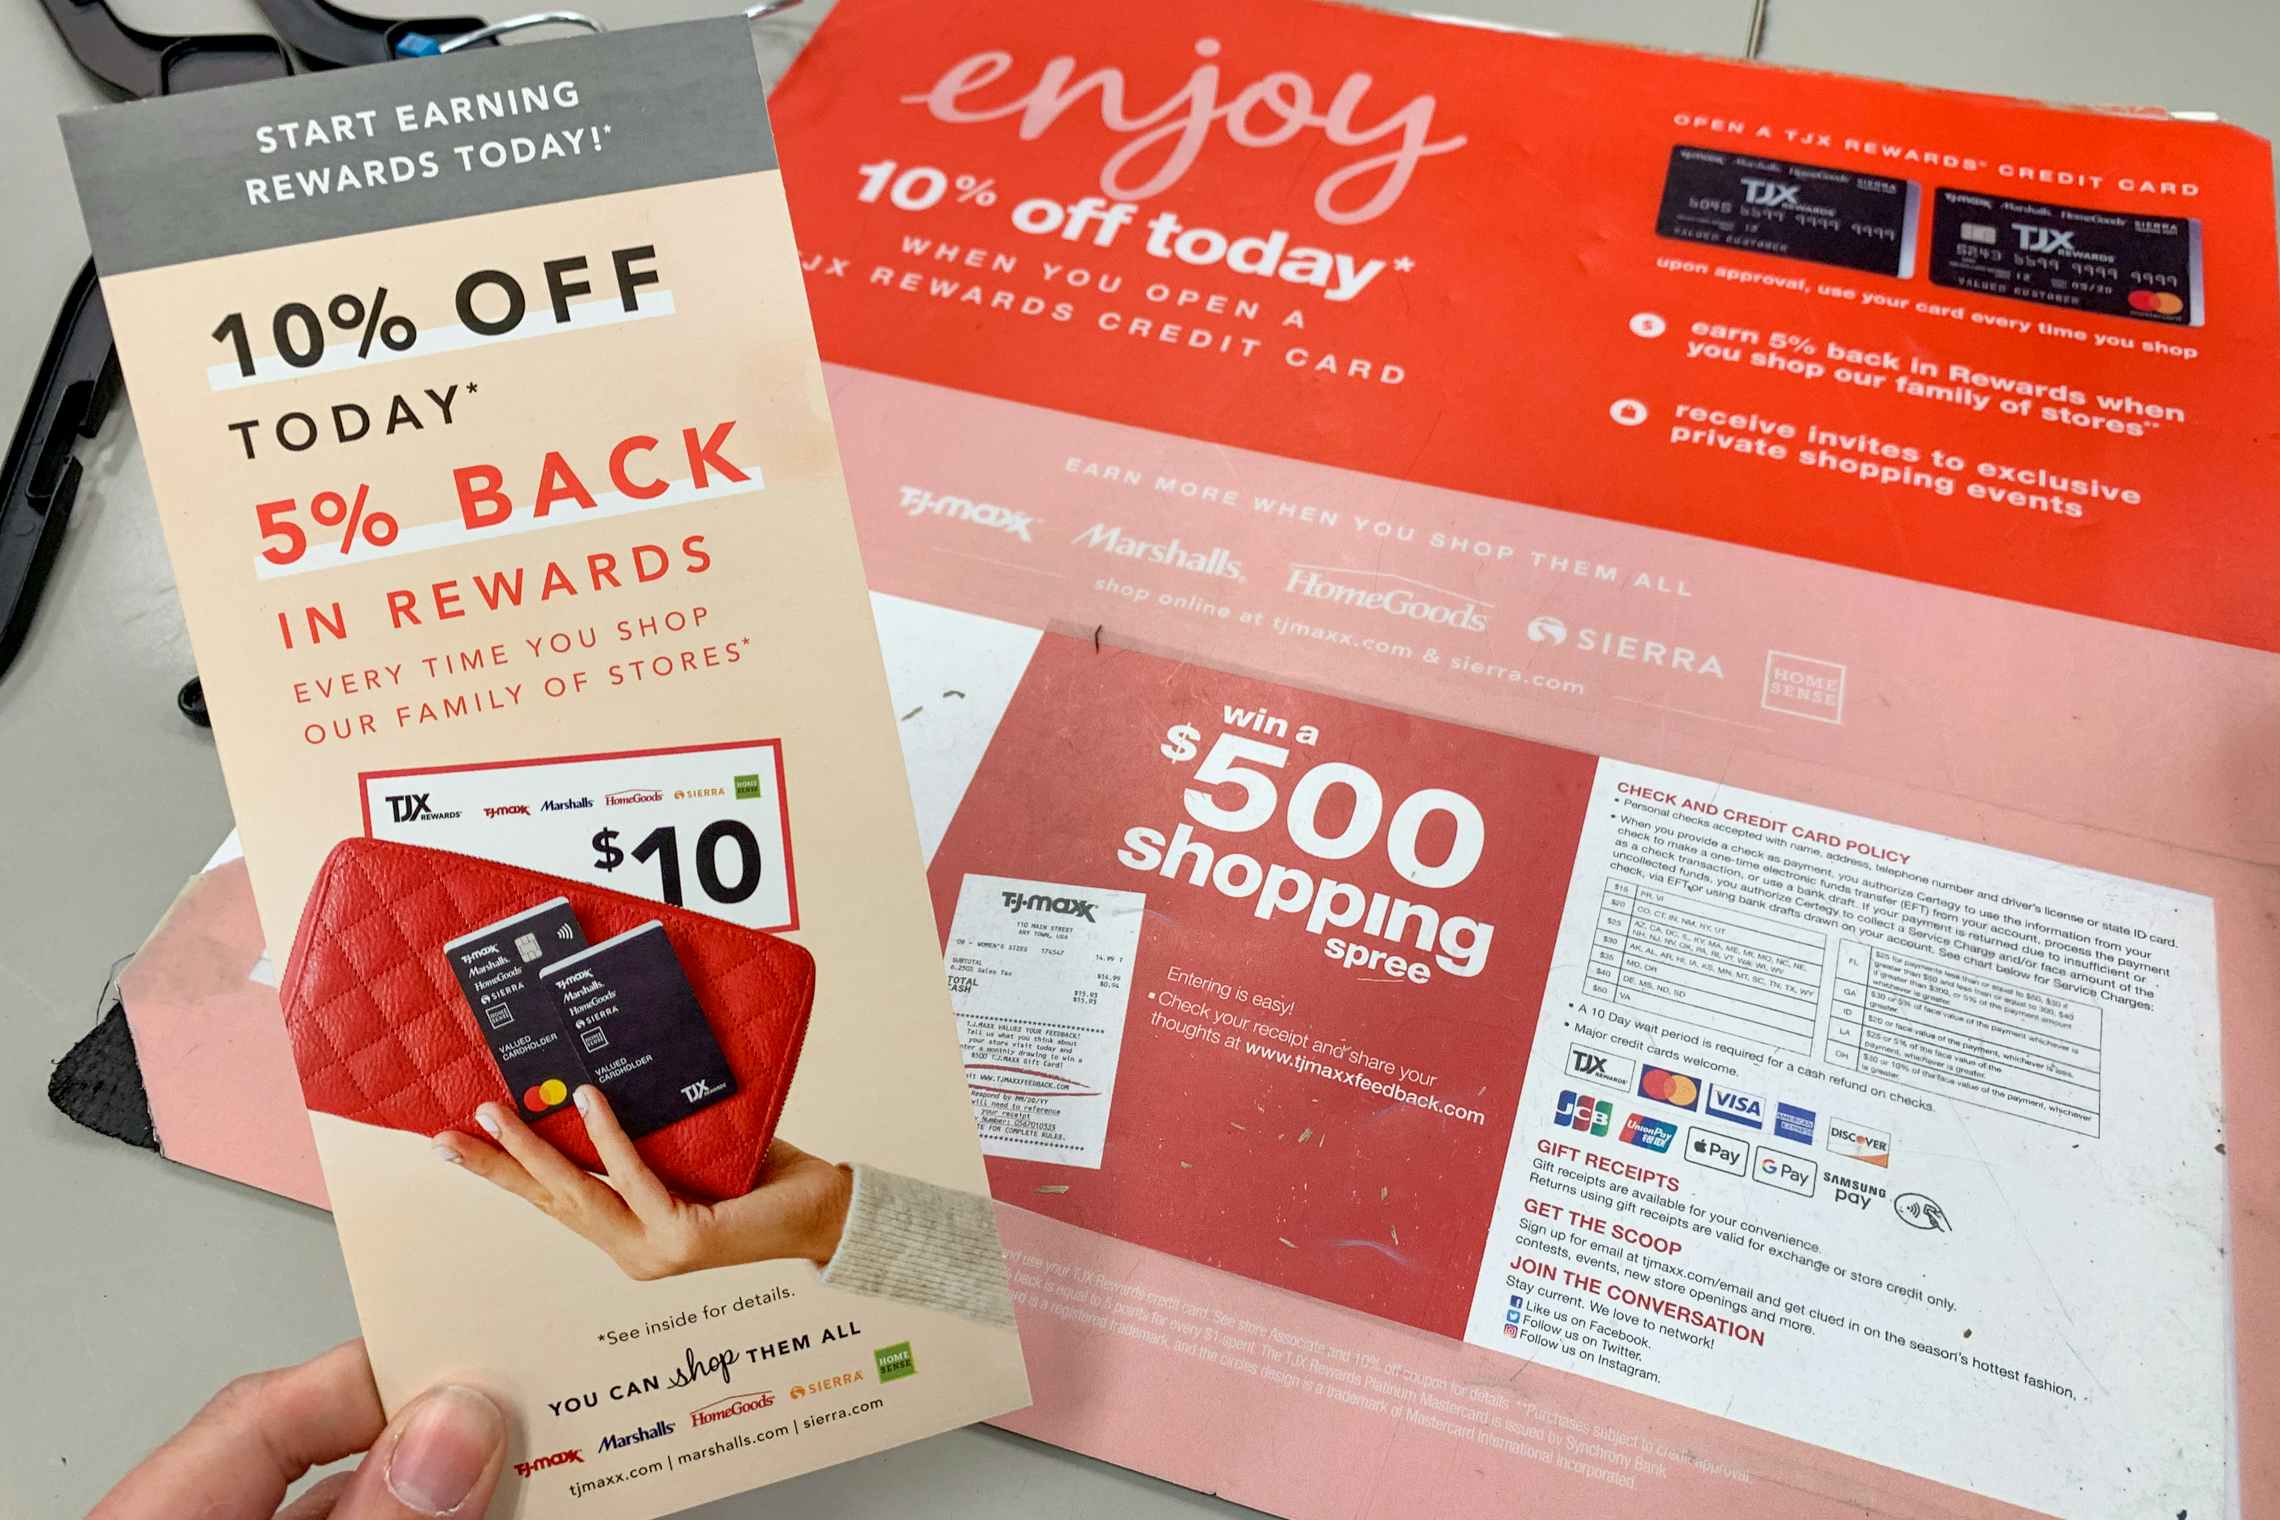 TJ Maxx credit card and reward brochure.